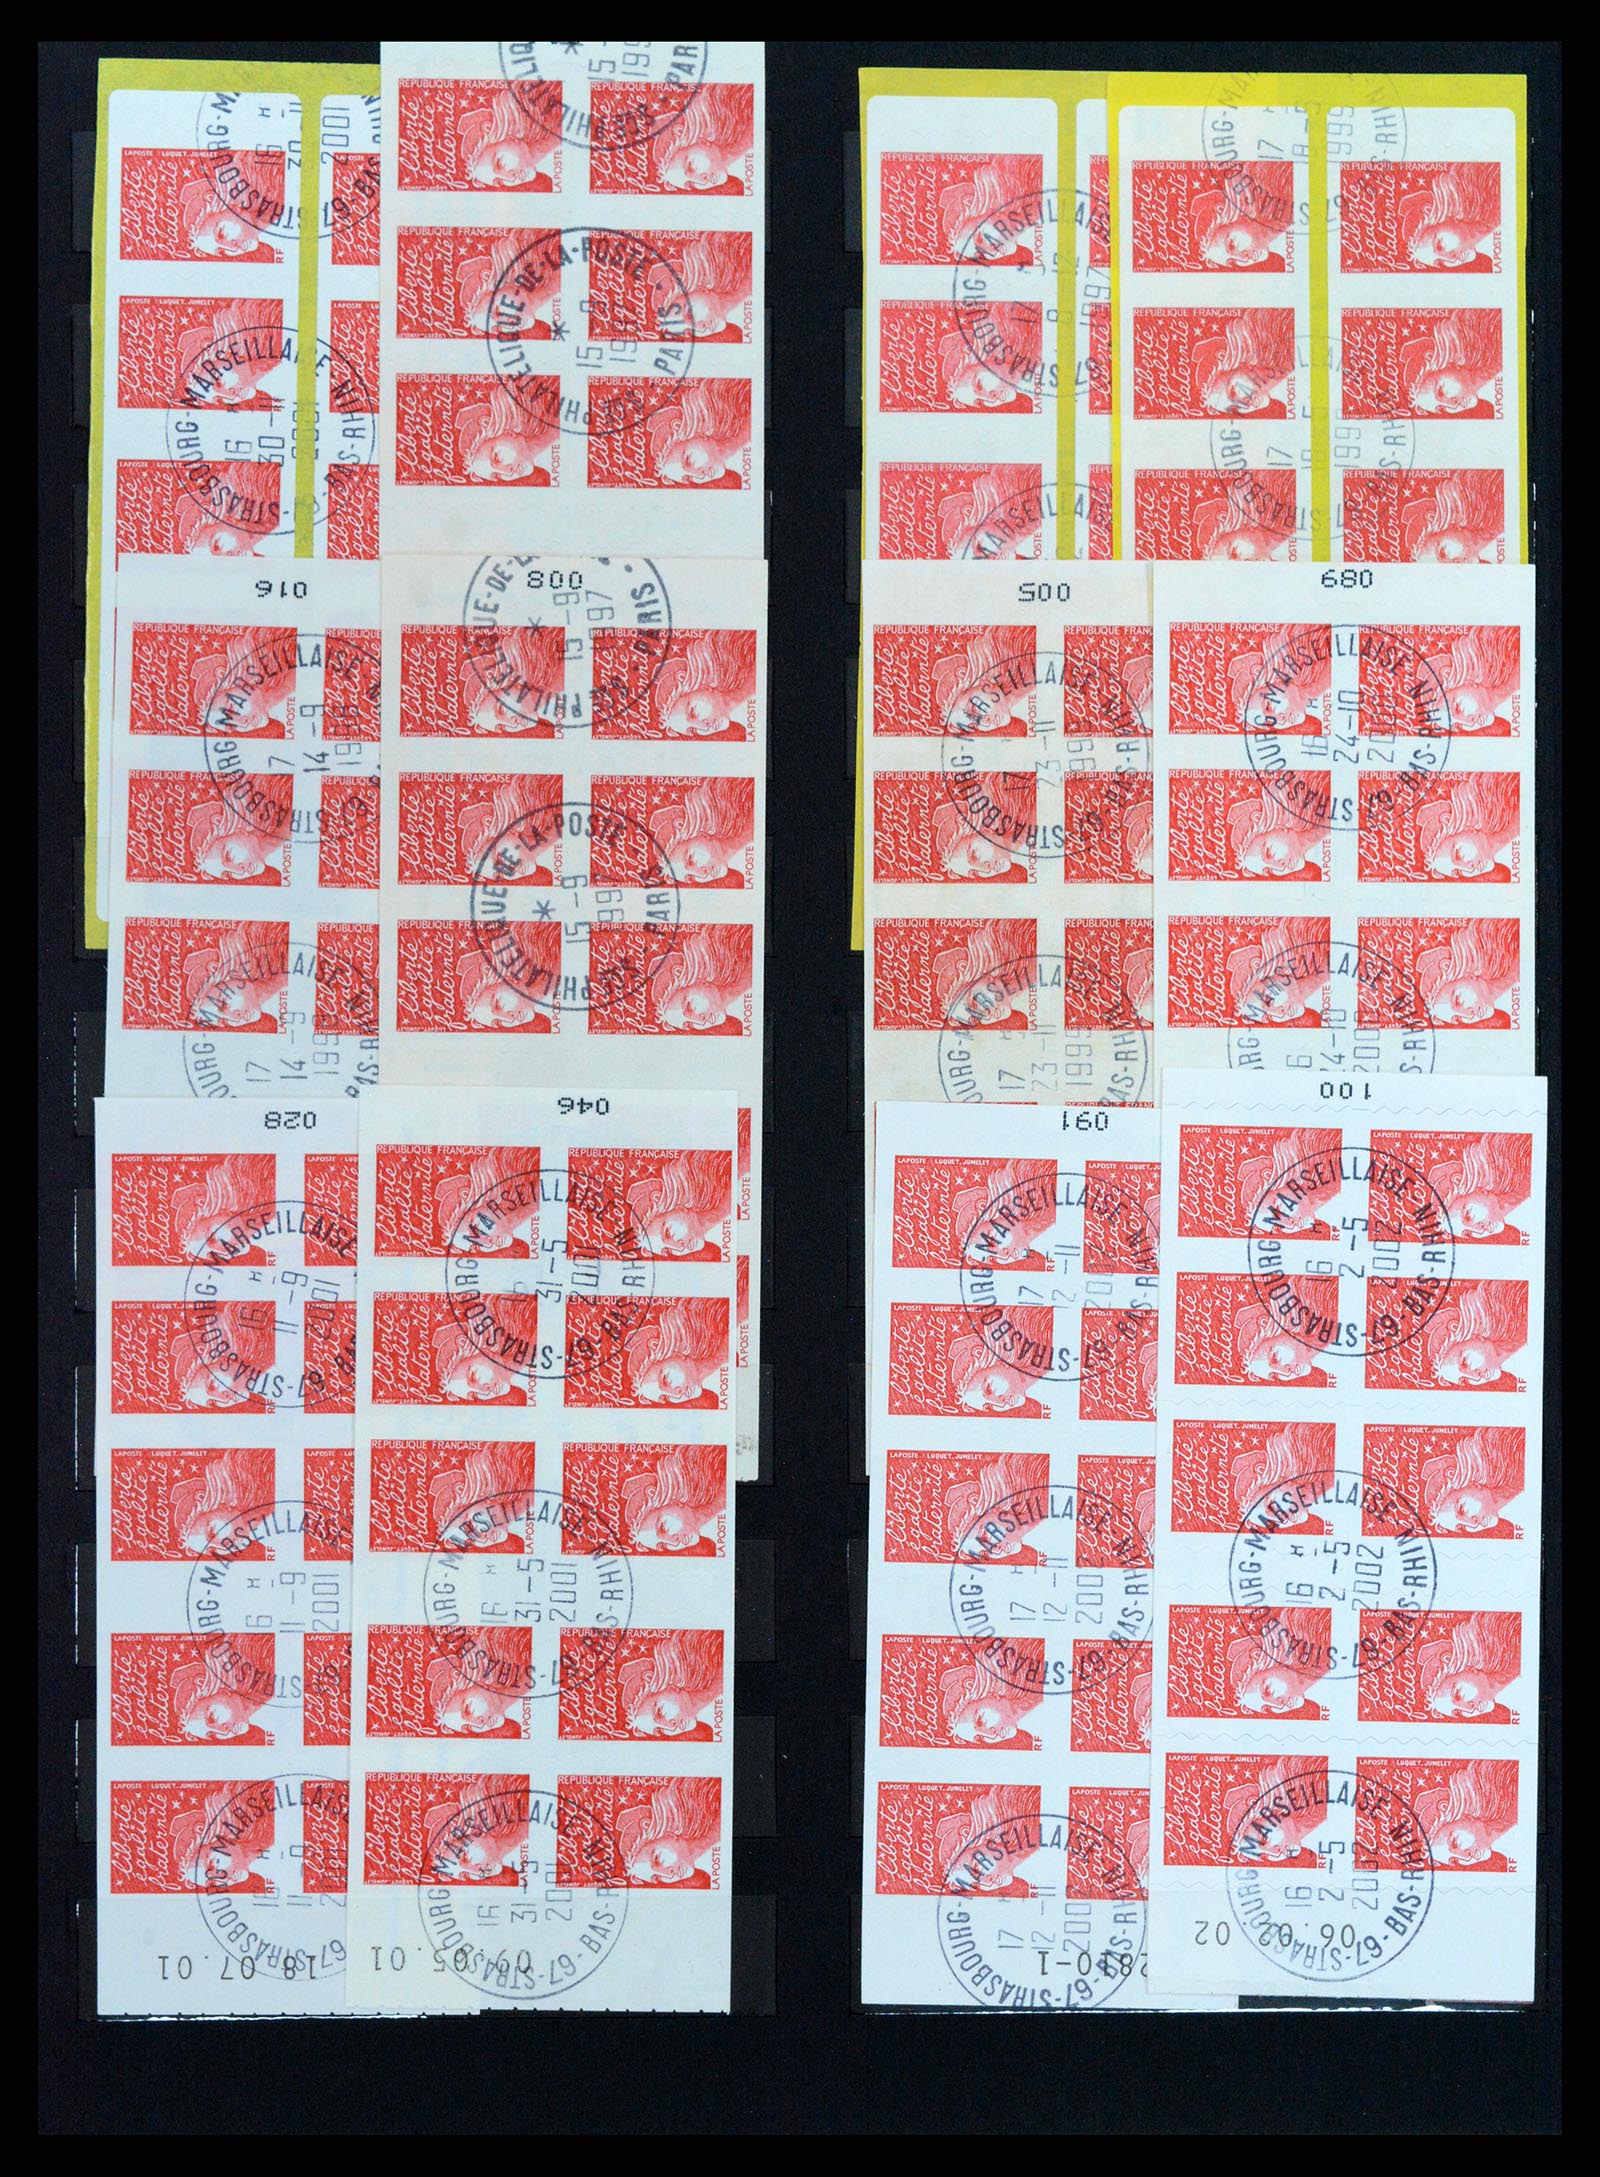 37542 033 - Stamp collection 37542 France stamp booklets 1952-2004.